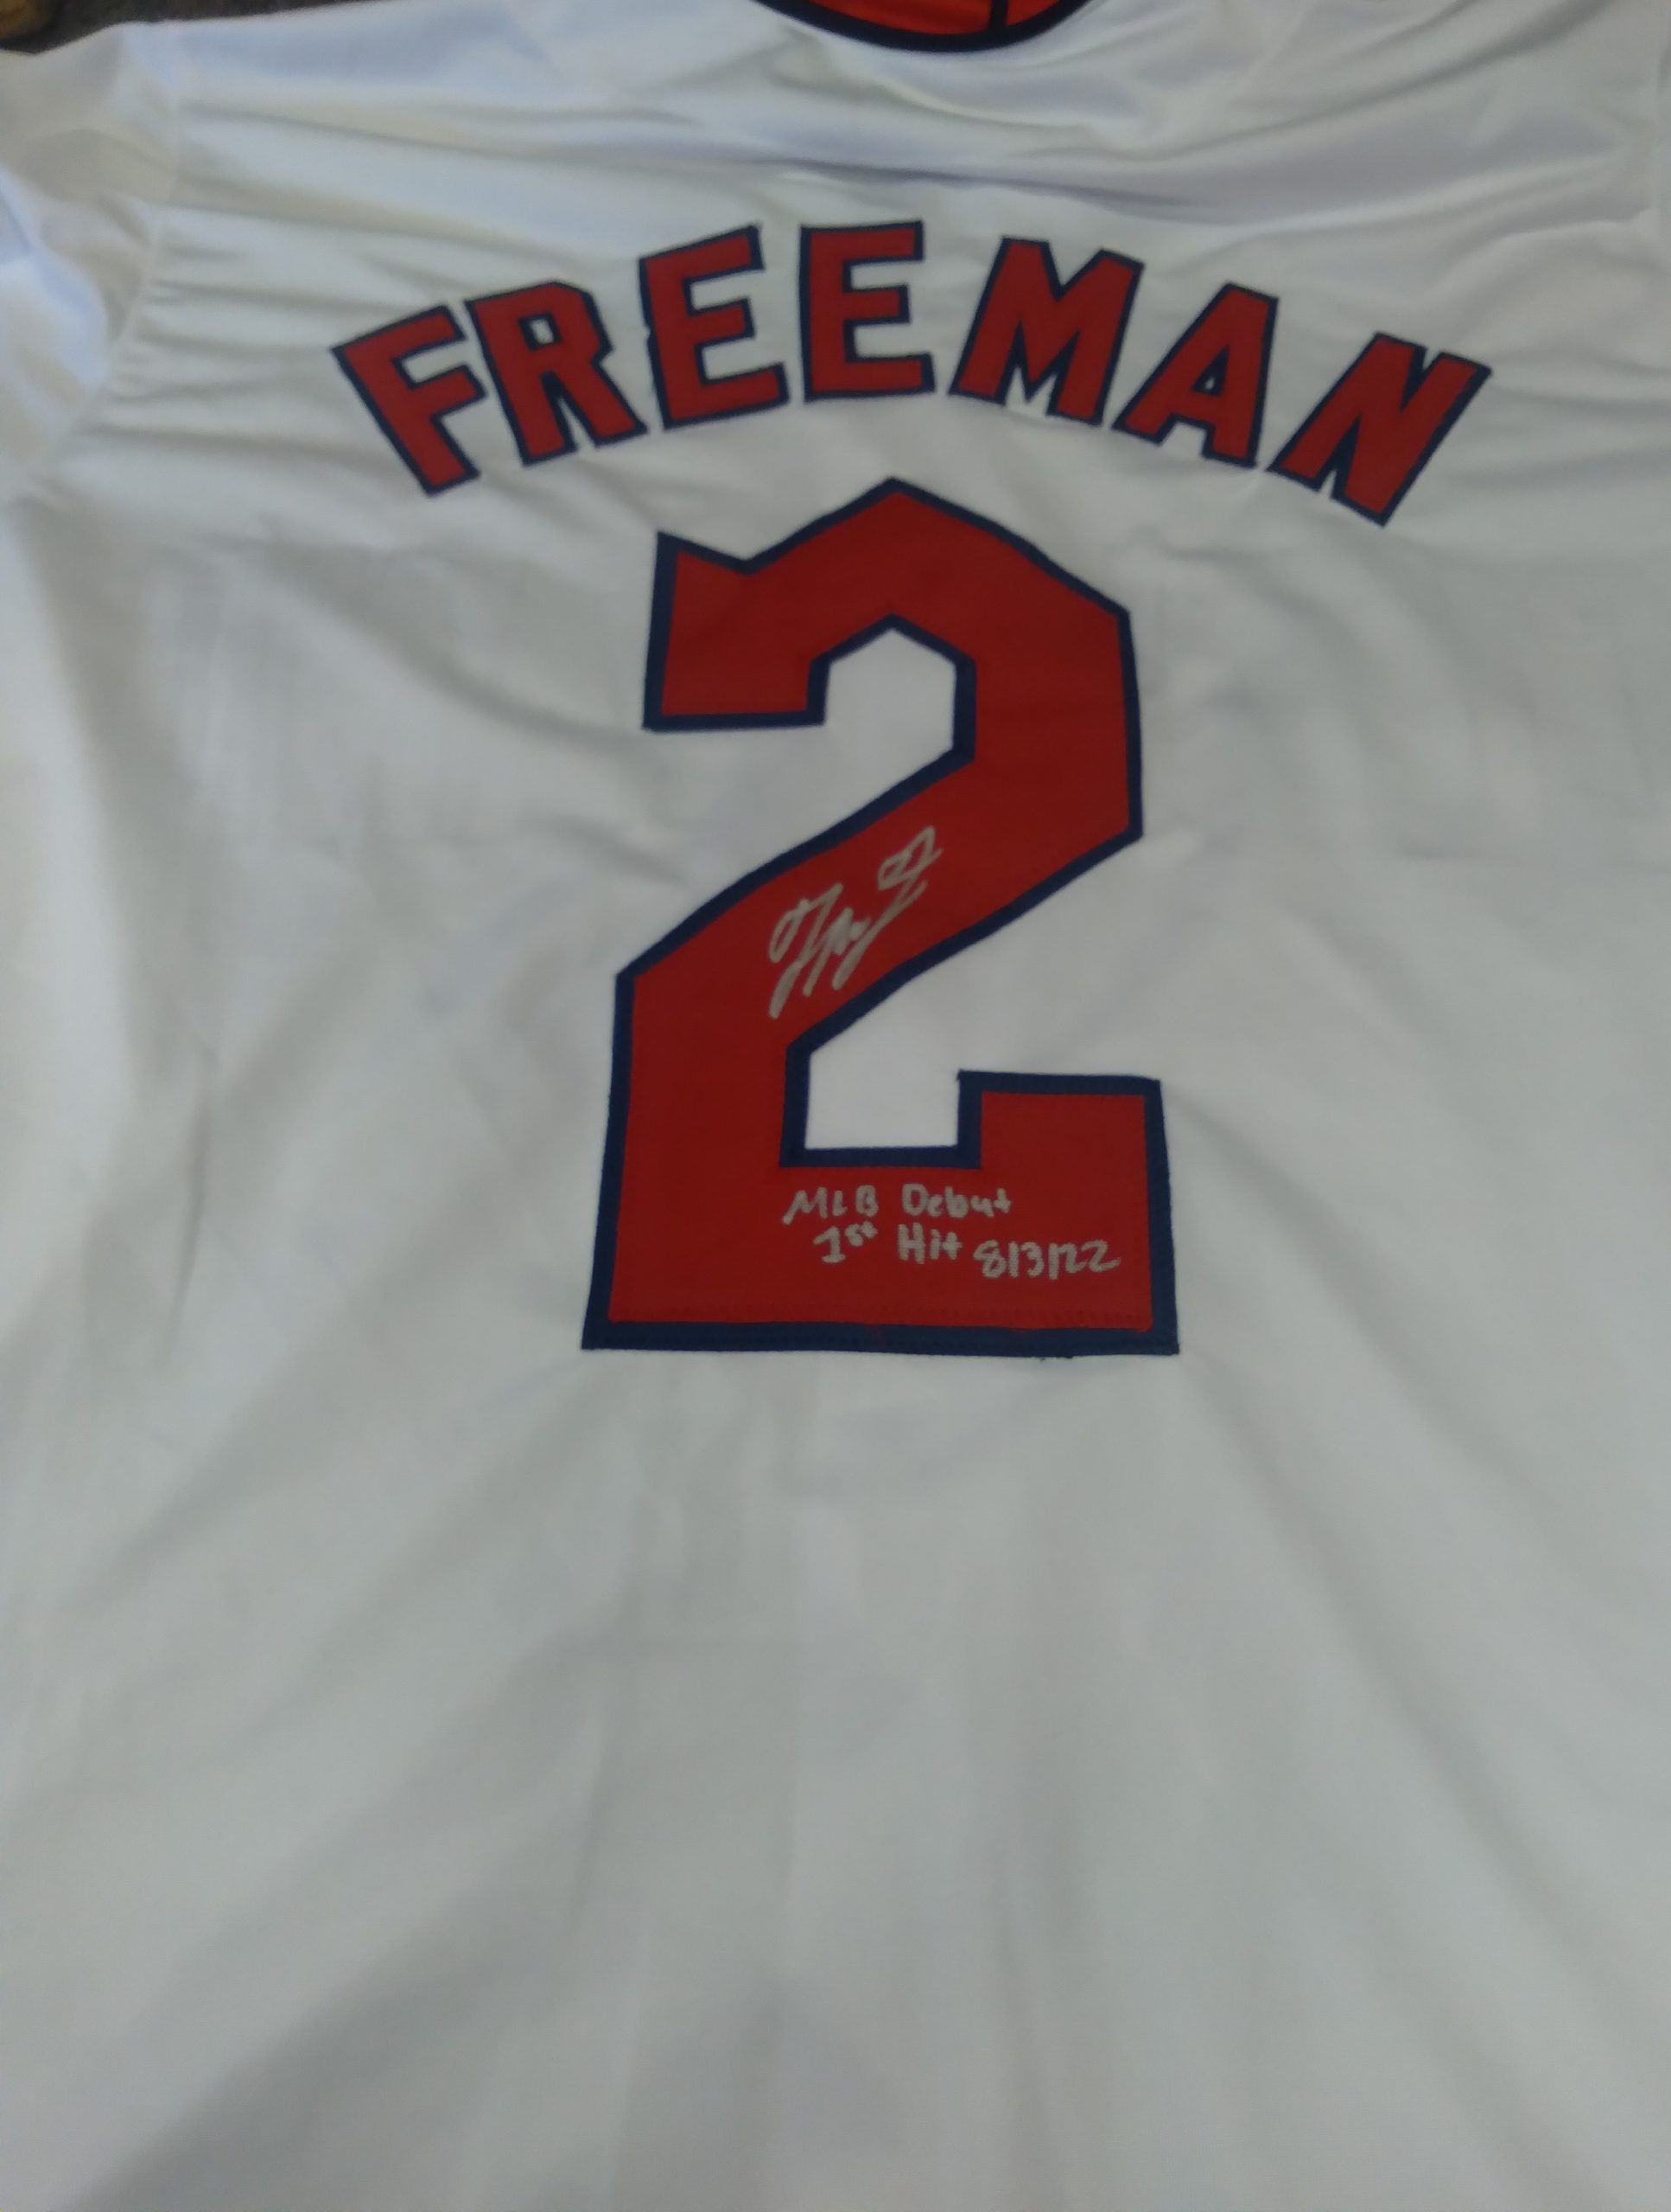 freeman red jersey